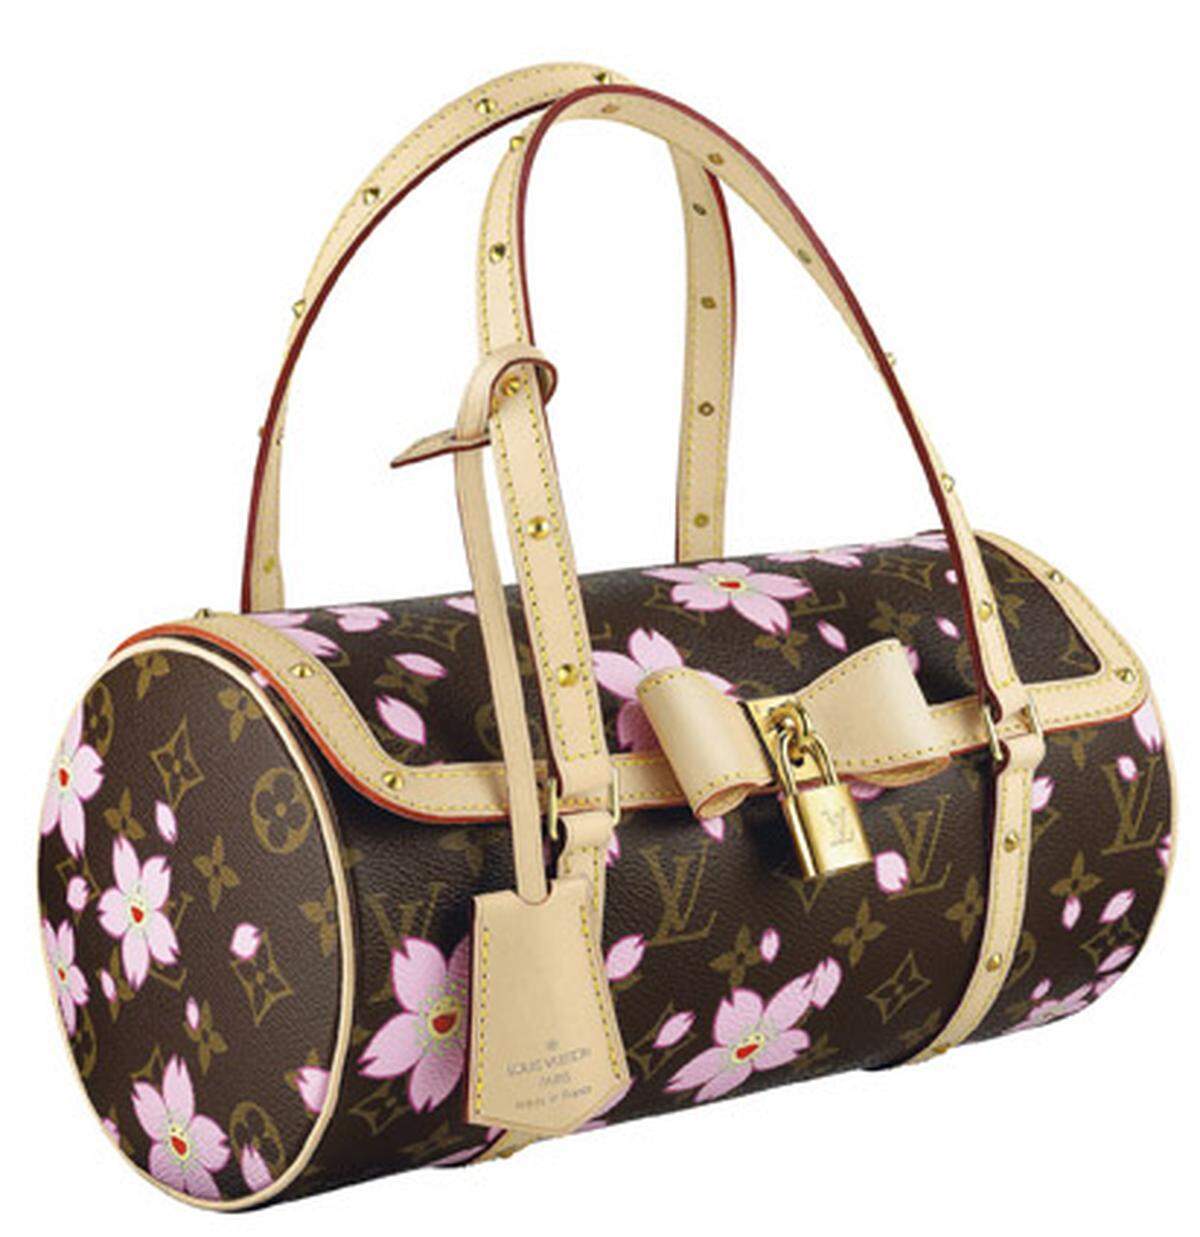 Louis Vuitton: "Cherry Blossom"